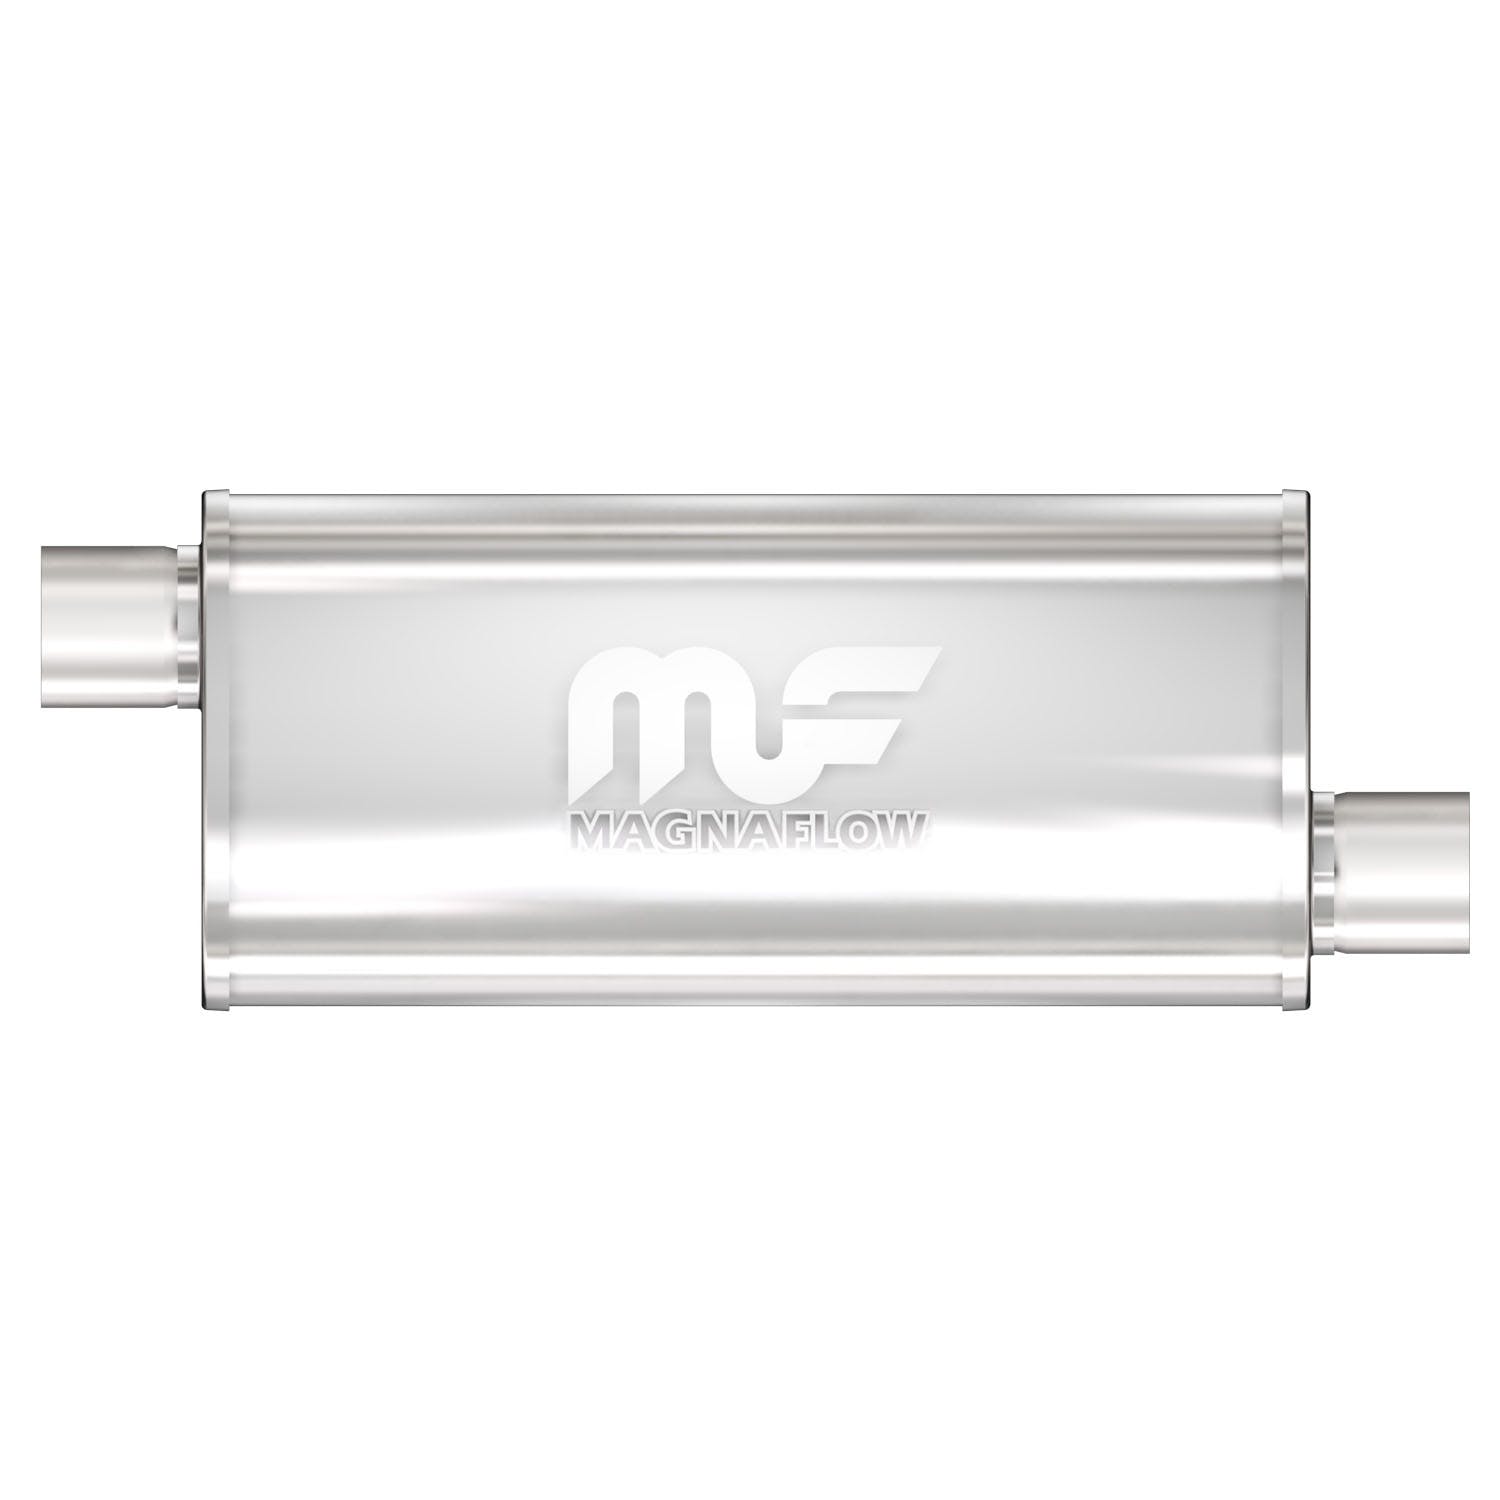 MagnaFlow Exhaust Products 14263 Universal Muffler